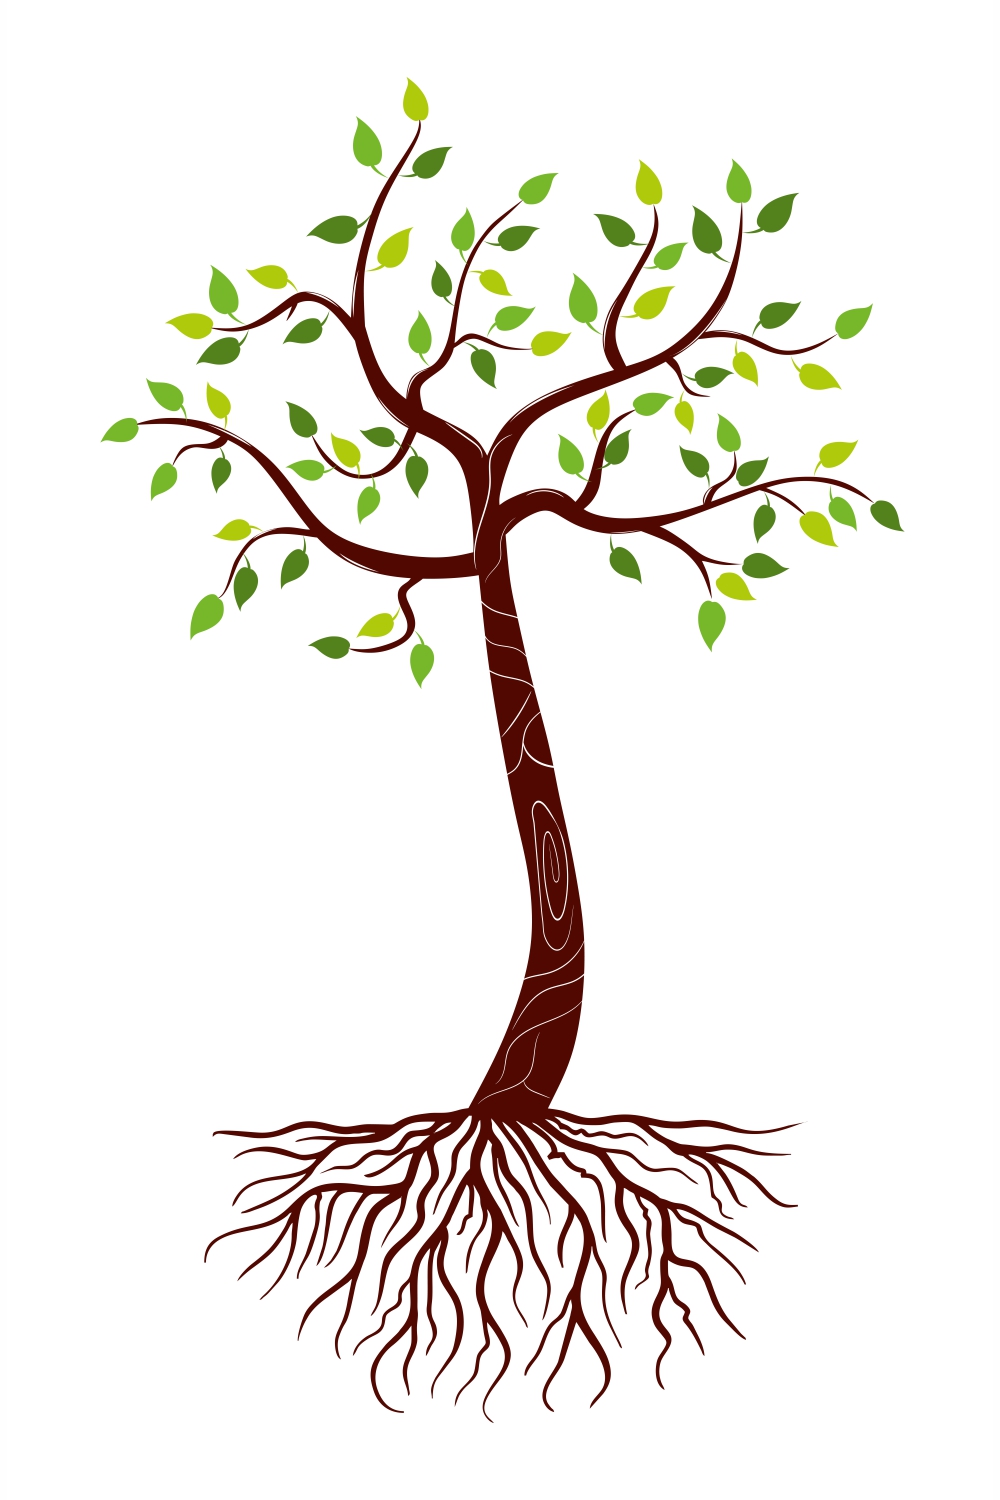 Tree logo pinterest preview image.